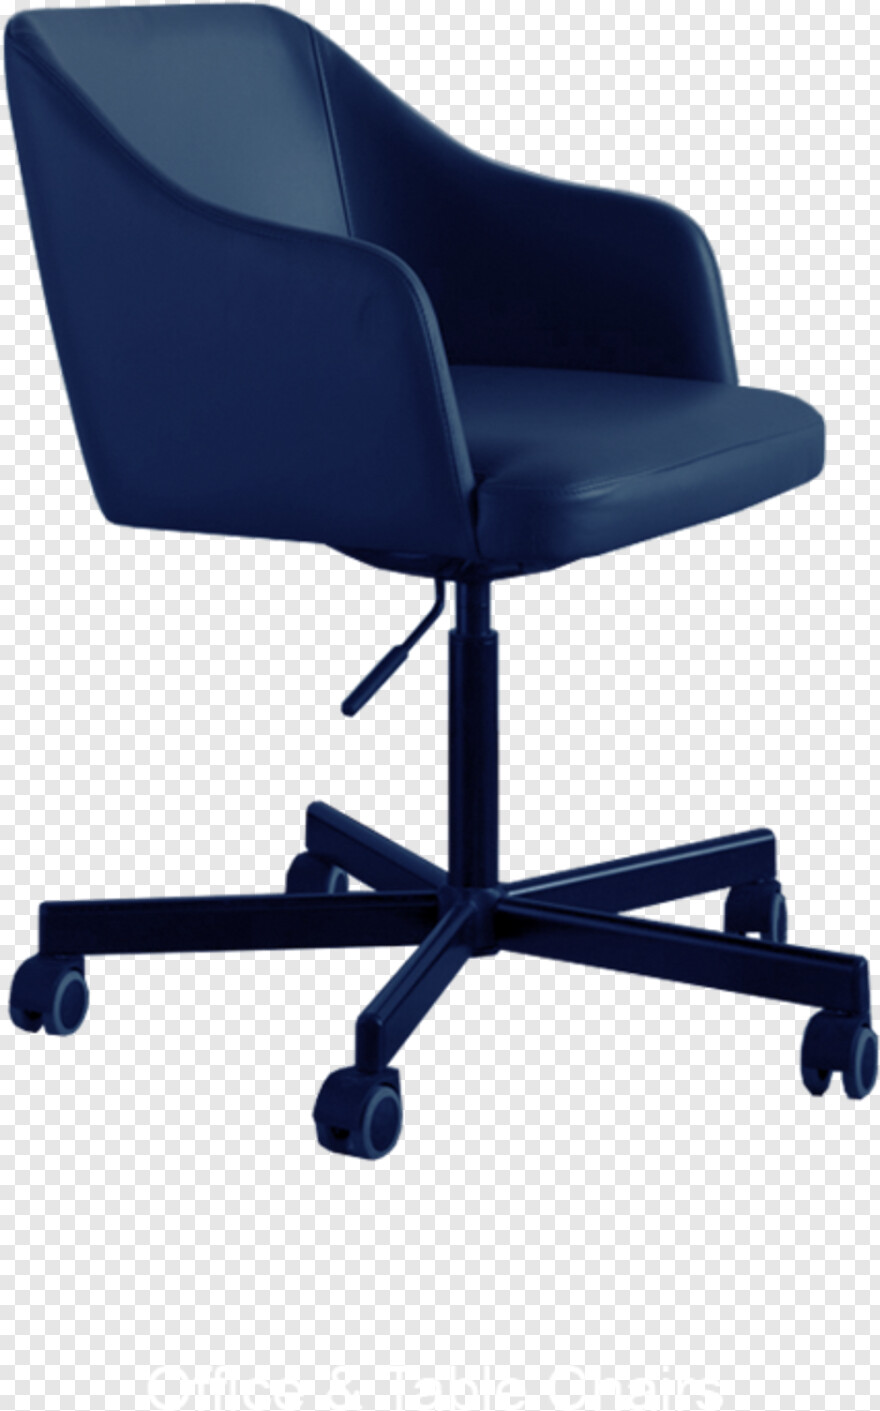 folding-chair # 1040476